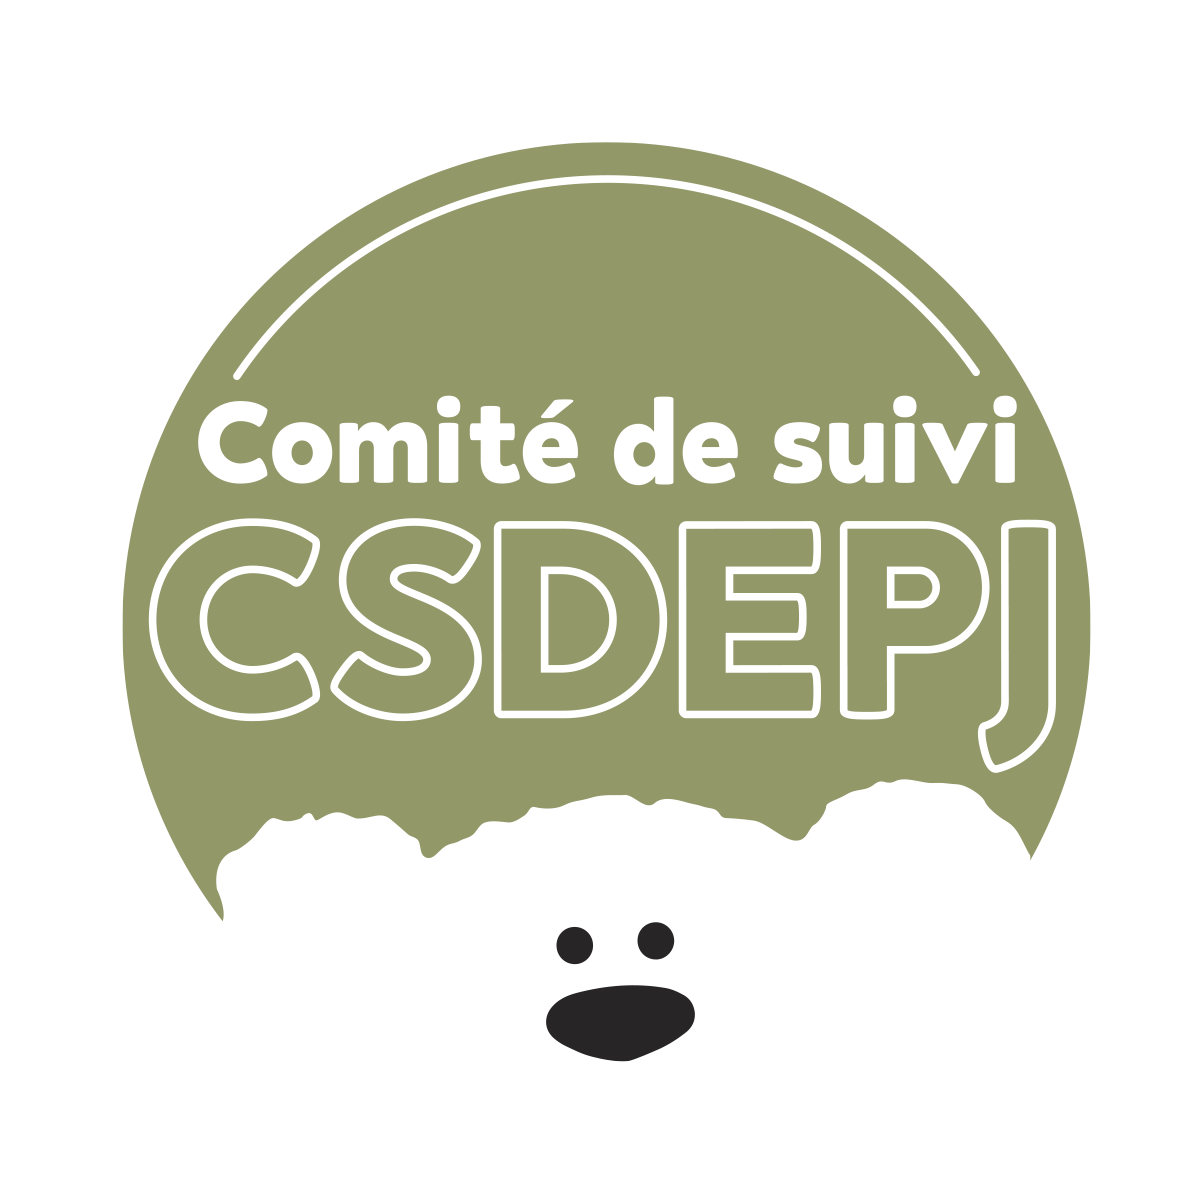 CSDEPJ Logo